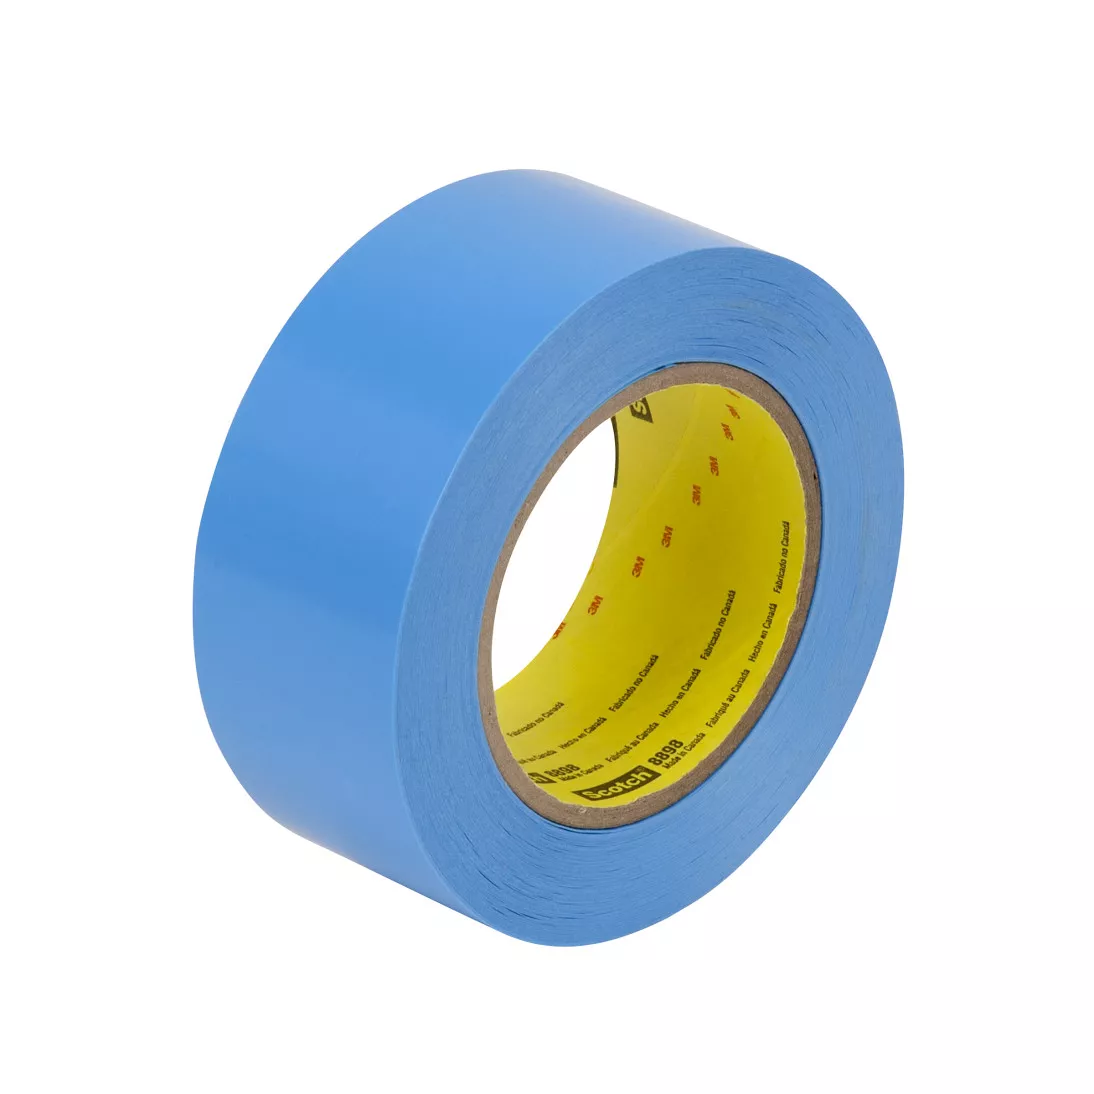 Scotch® Strapping Tape 8898, Blue, 1520 mm x 55 m, 4.6 mil, 1 roll per
case